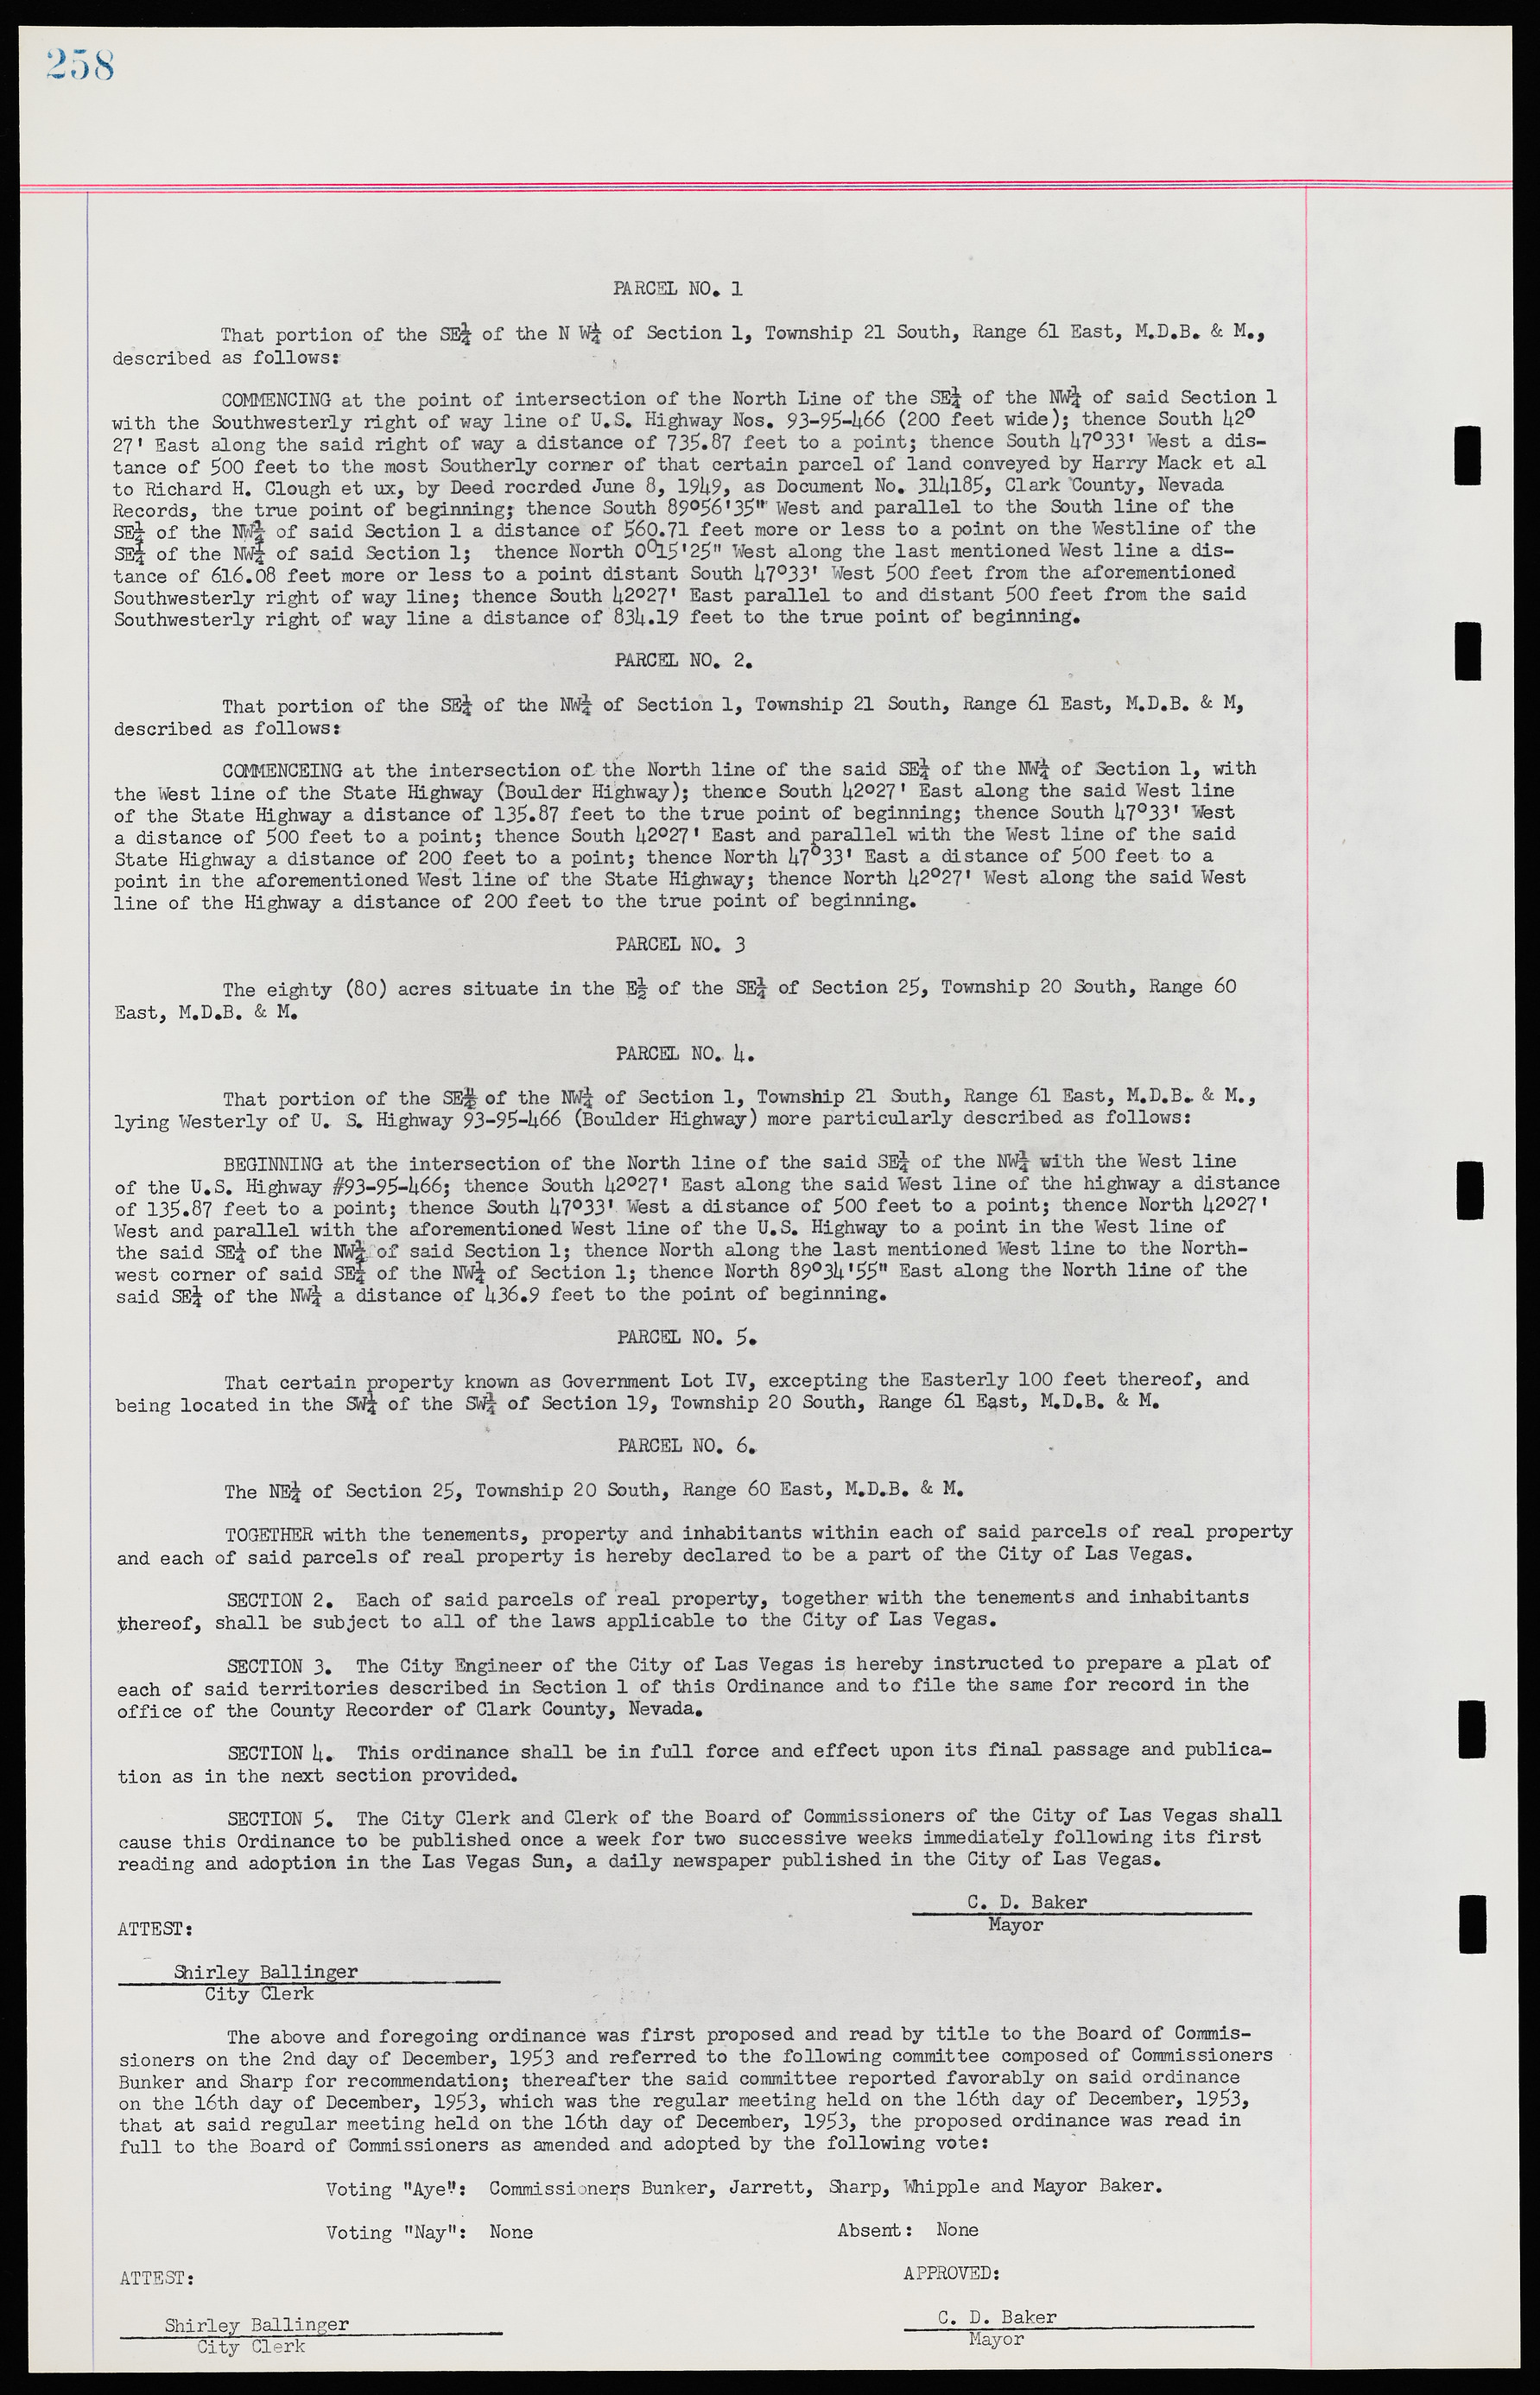 Las Vegas City Ordinances, November 13, 1950 to August 6, 1958, lvc000015-266